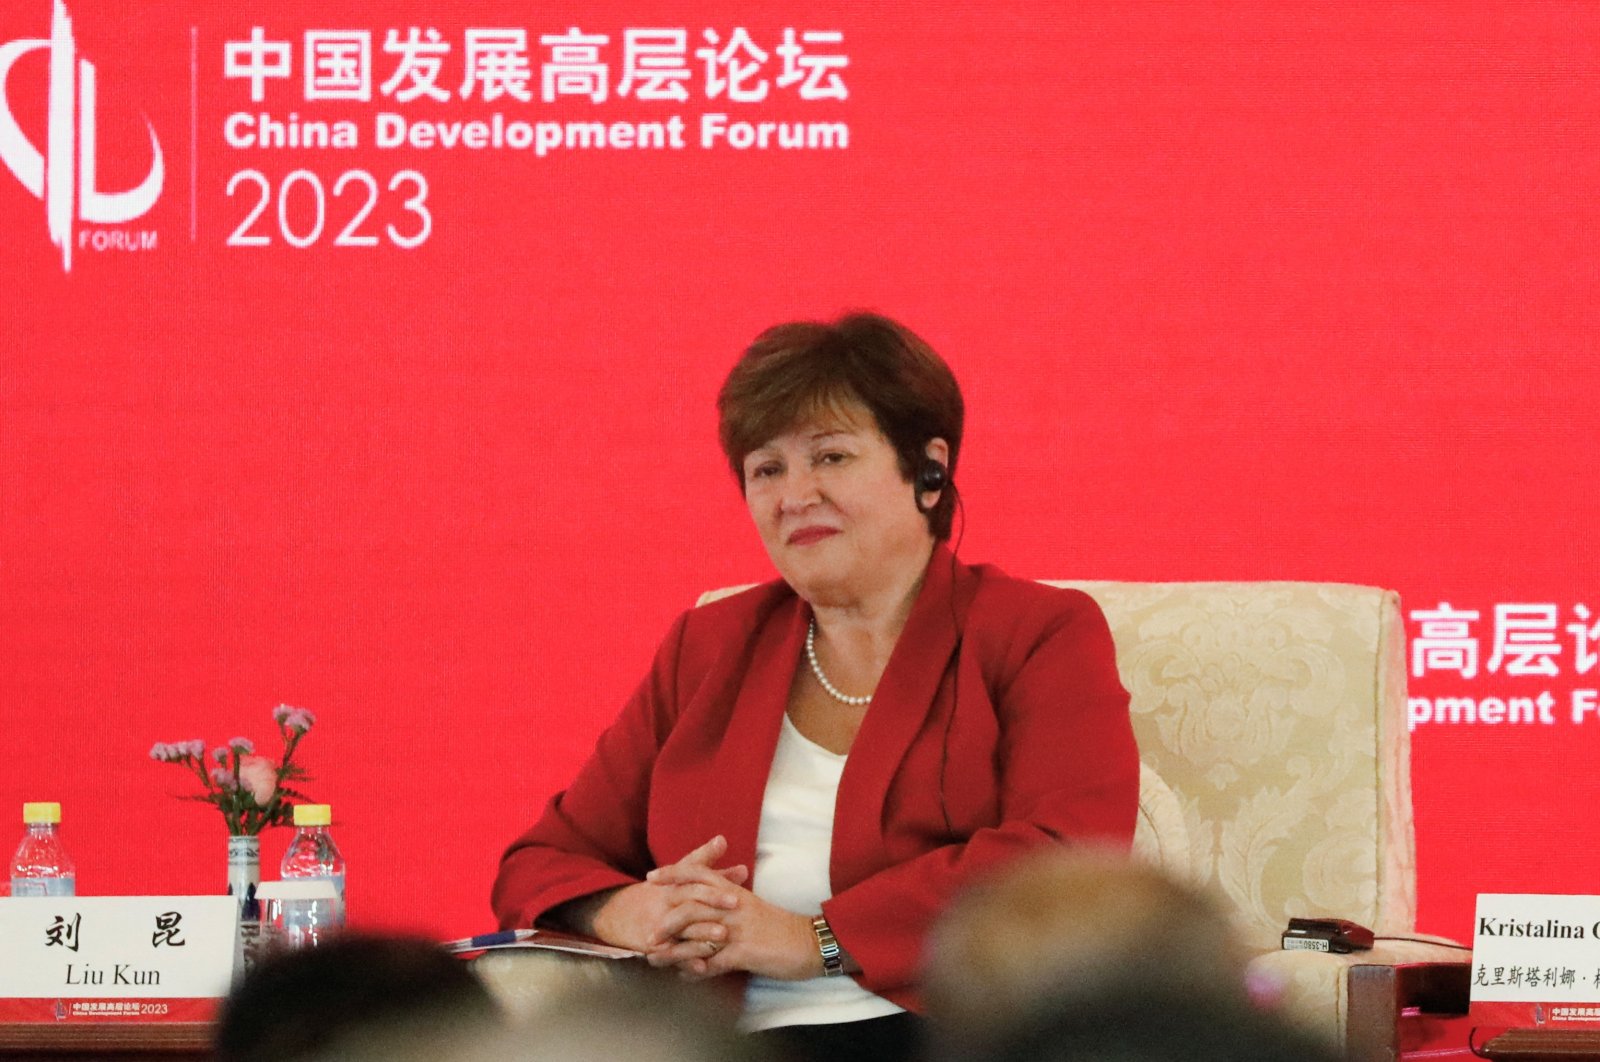 International Monetary Fund (IMF) Managing Director Kristalina Georgieva attends the China Development Forum 2023, in Beijing, China, March 26, 2023. (Reuters Photo)